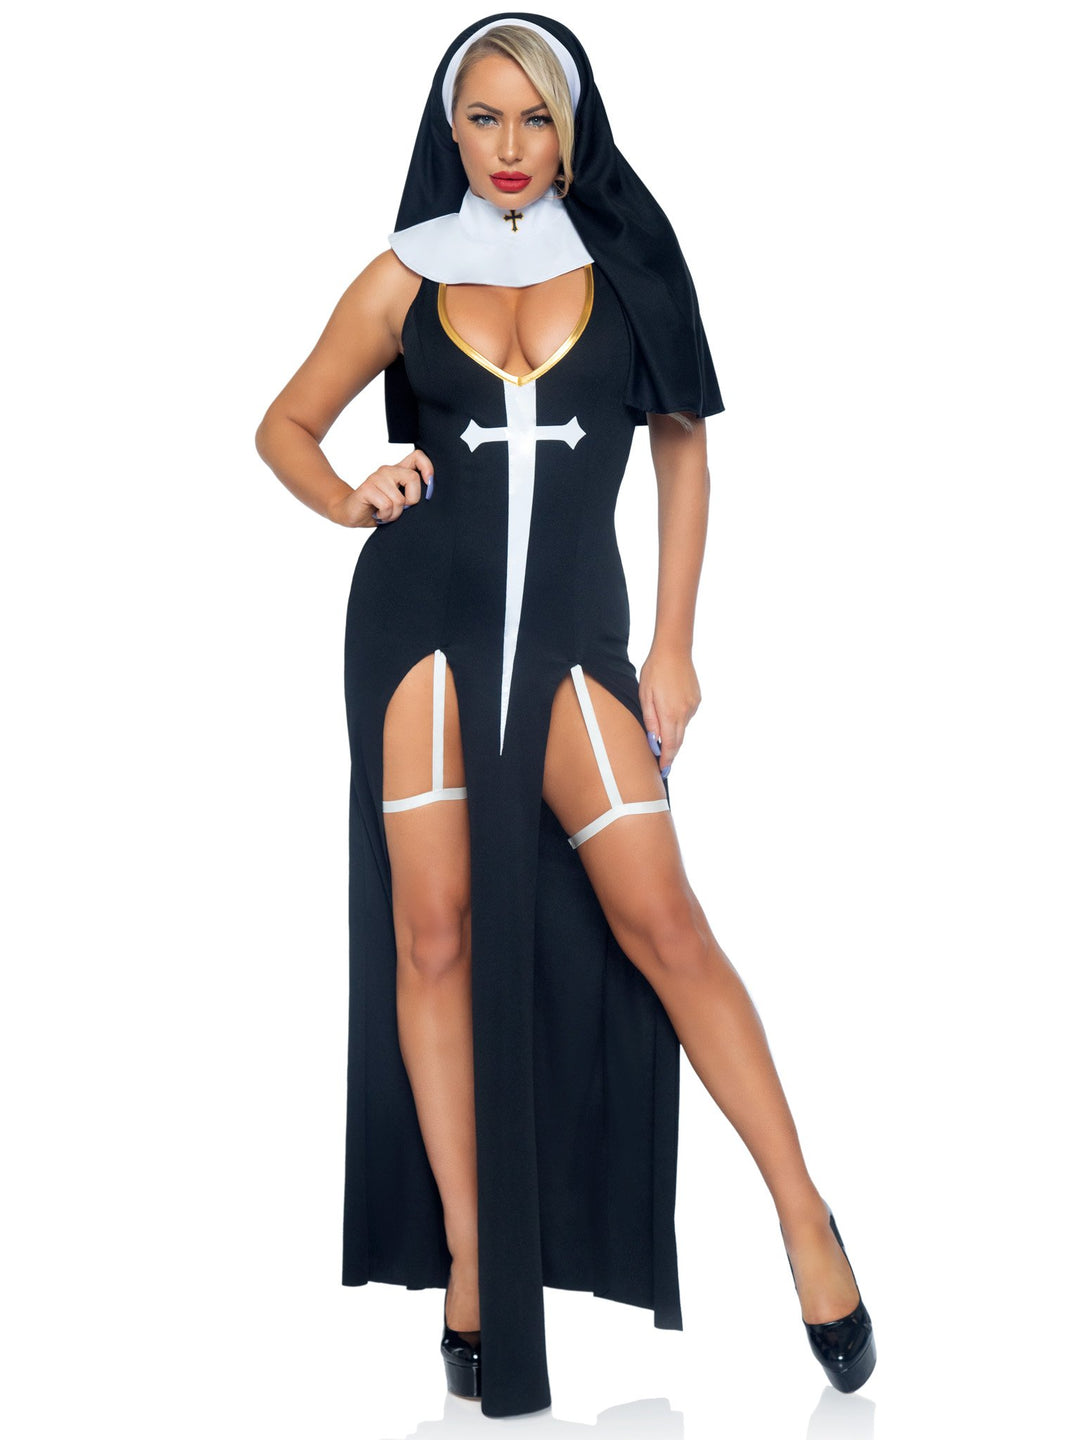 Sultry Sinner Nun Slit Garter Dress with Vinyl Cross Detail and Nun Habit